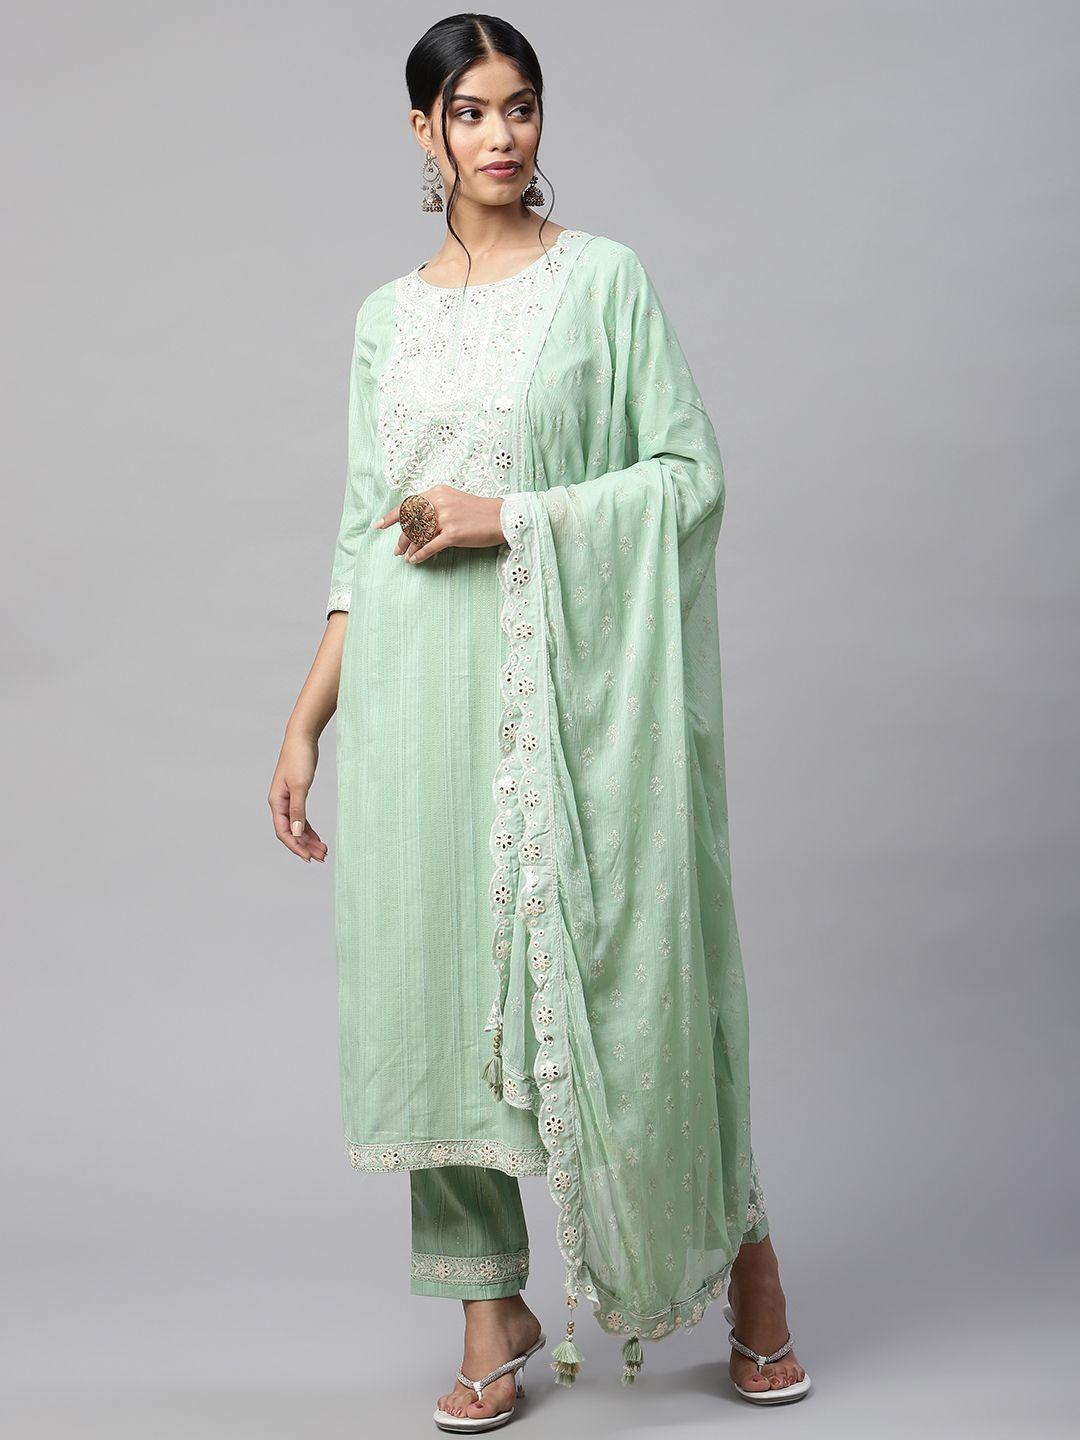 readiprint-fashions-women-green-floral-embroidered-cotton-kurta-with-palazzos-&-dupatta